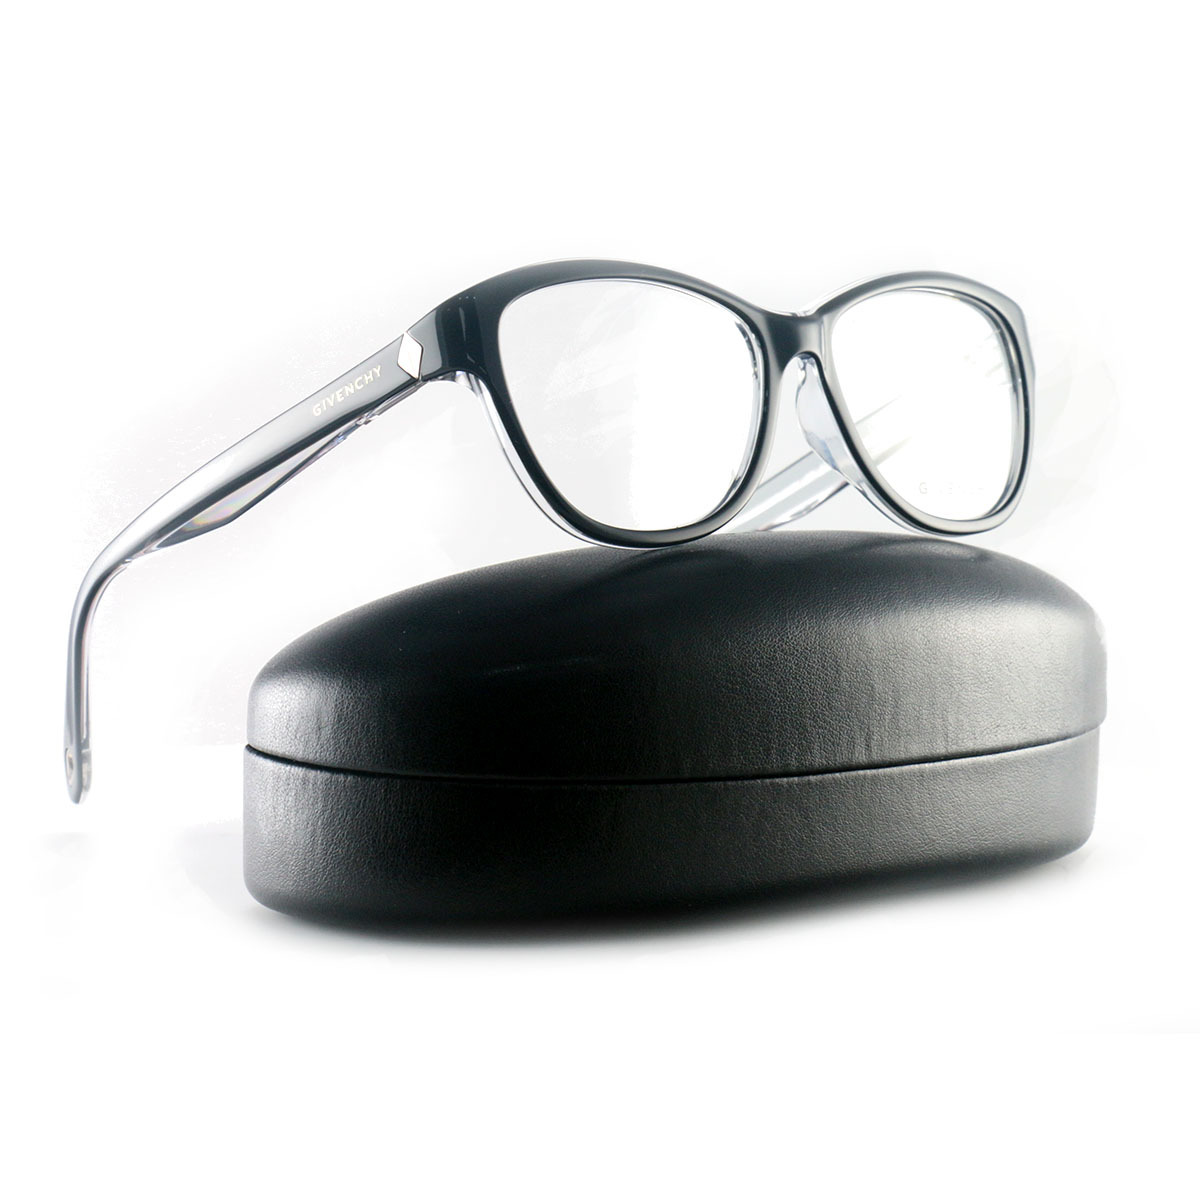 Givenchy Women S Eyeglasses Vgv942c Z32 Black 52 15 140 Full Rim